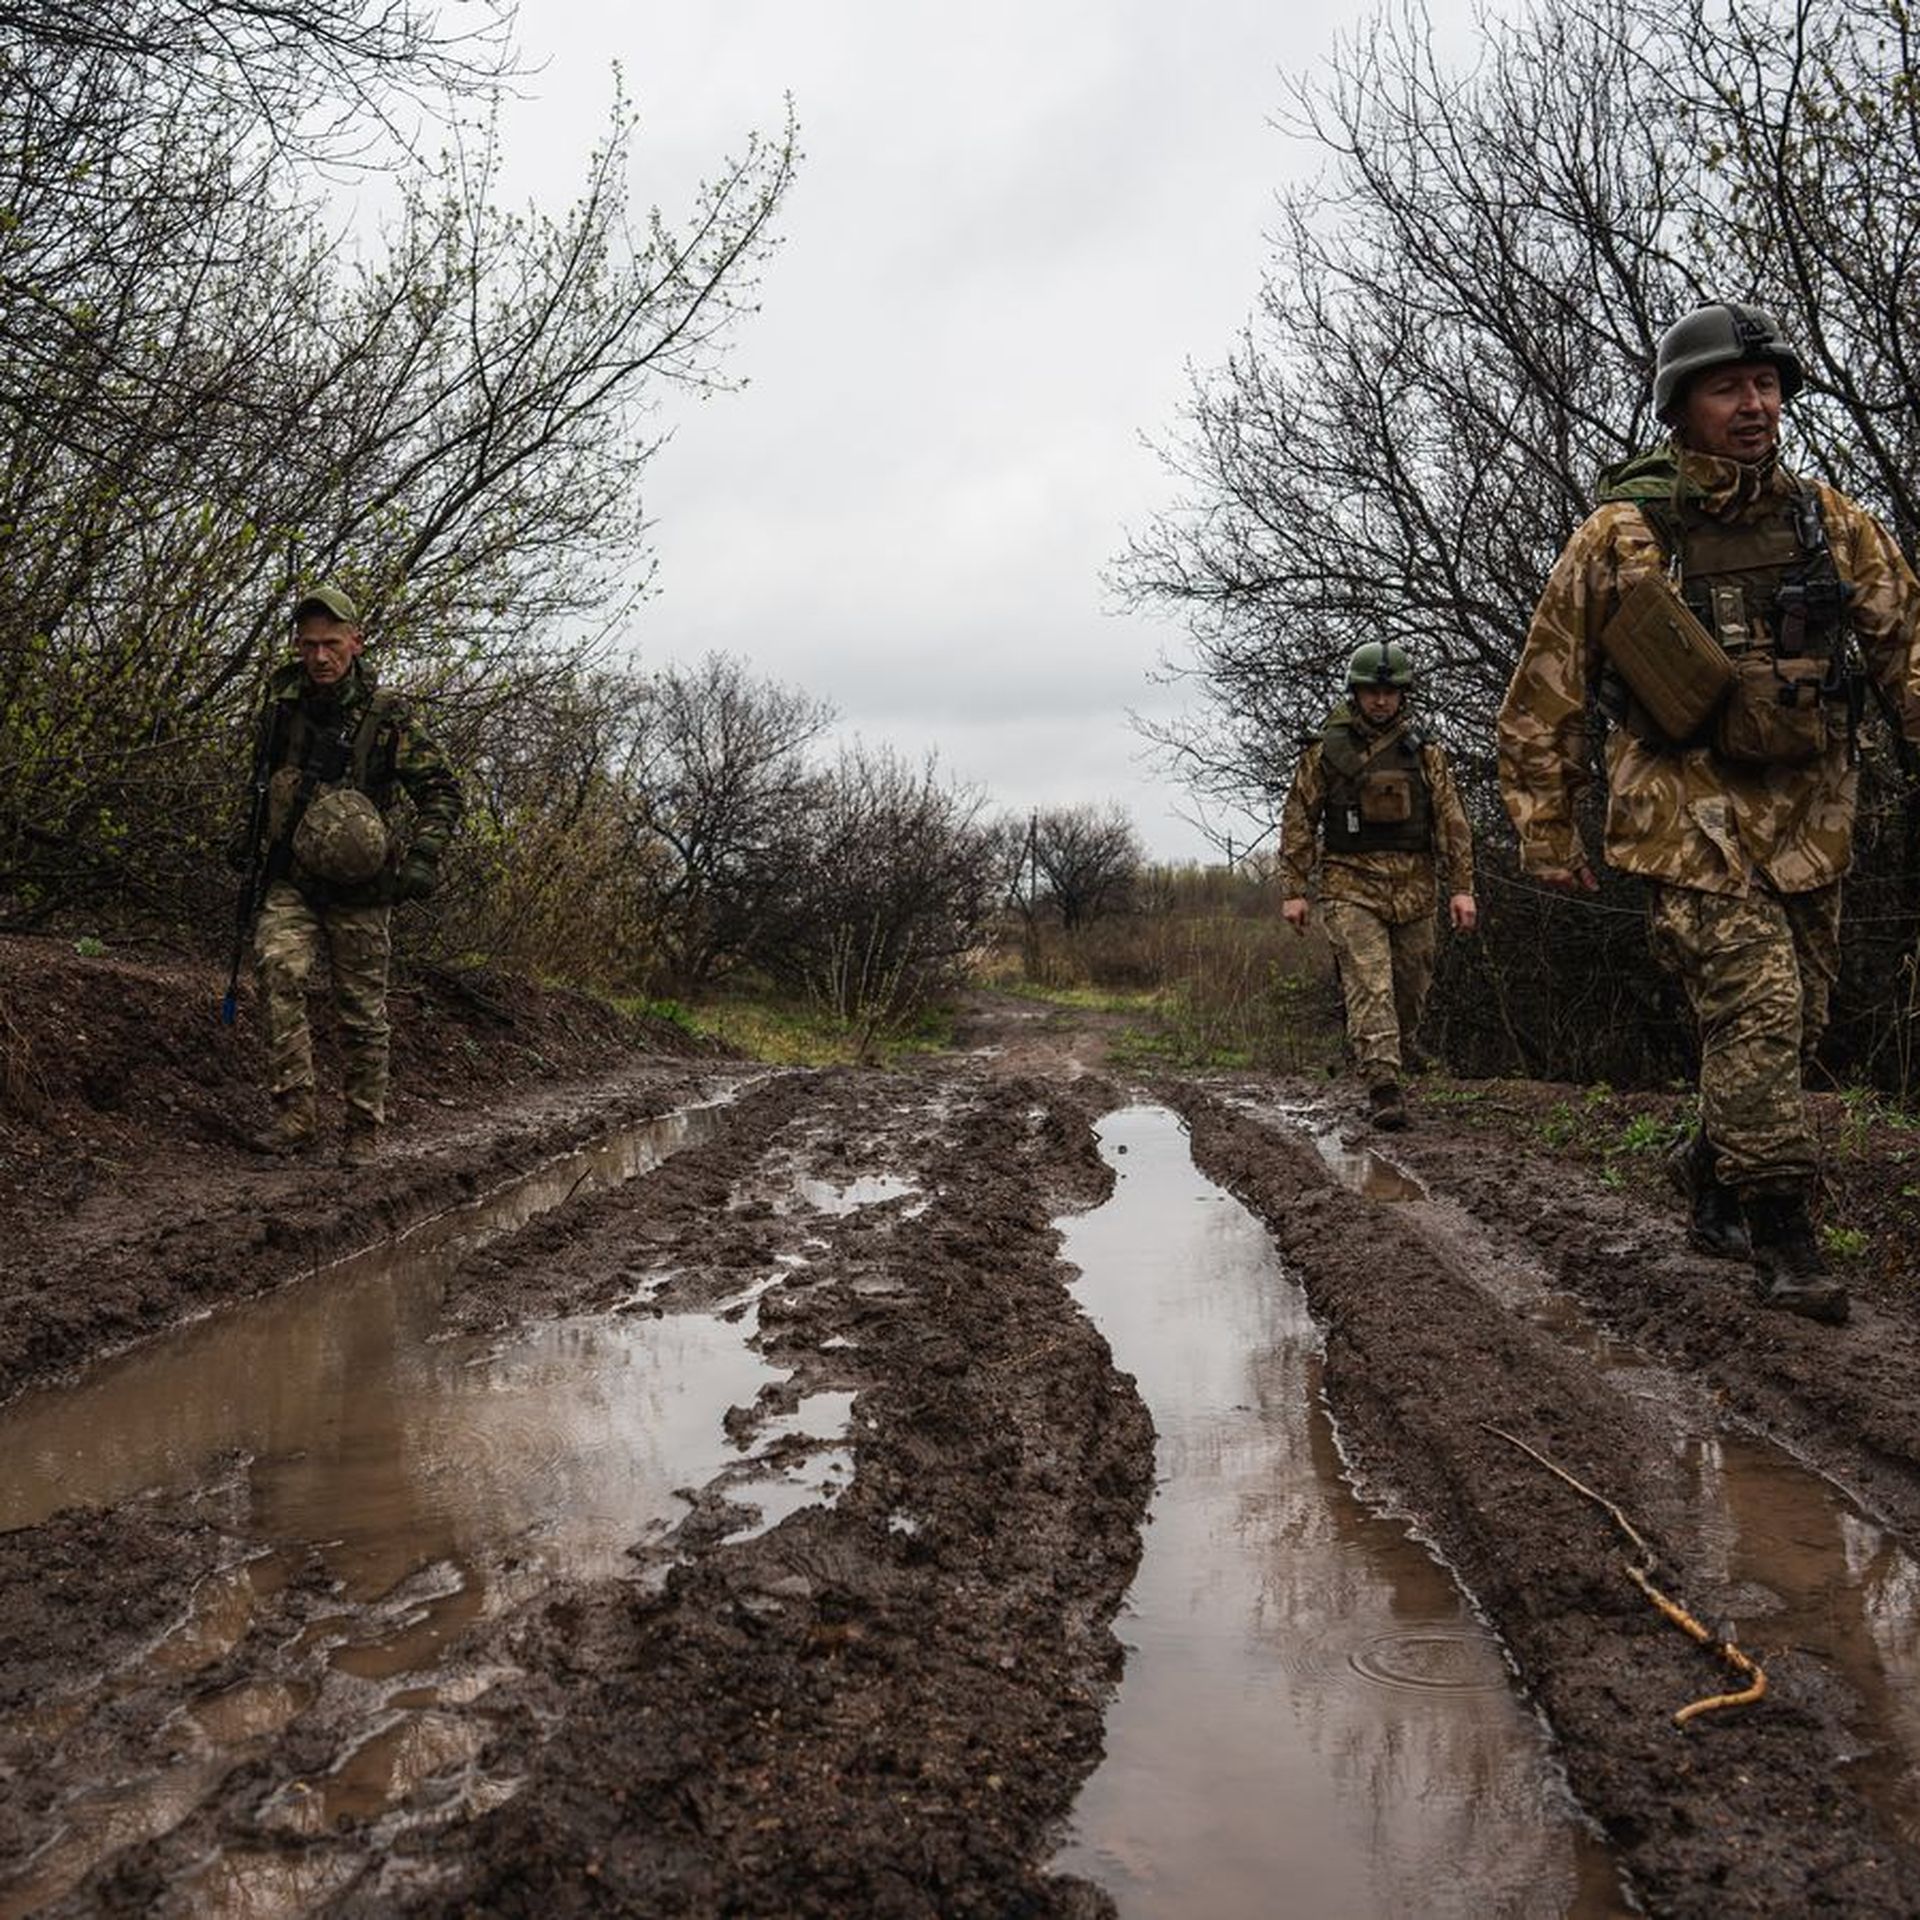 Ukrainian soldiers walk near the front line in the Donbas region of eastern Ukraine on April 14. Photo: Wolfgang Schwan/Anadolu Agency via Getty Images